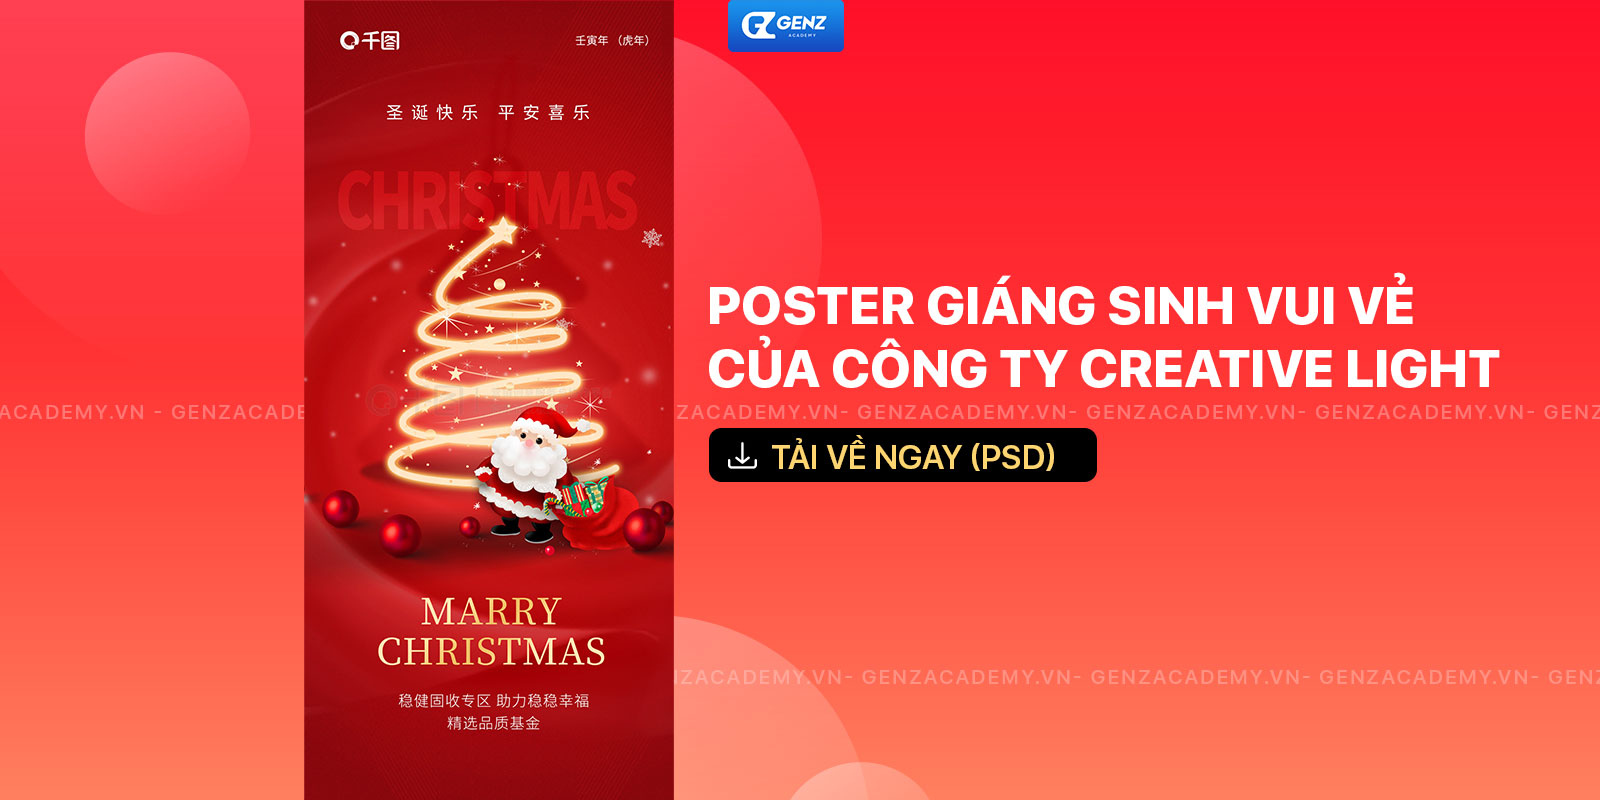 Poster Giáng sinh vui vẻ của Công ty Creative Light Painting - GenZ Academy-GenZ Academy